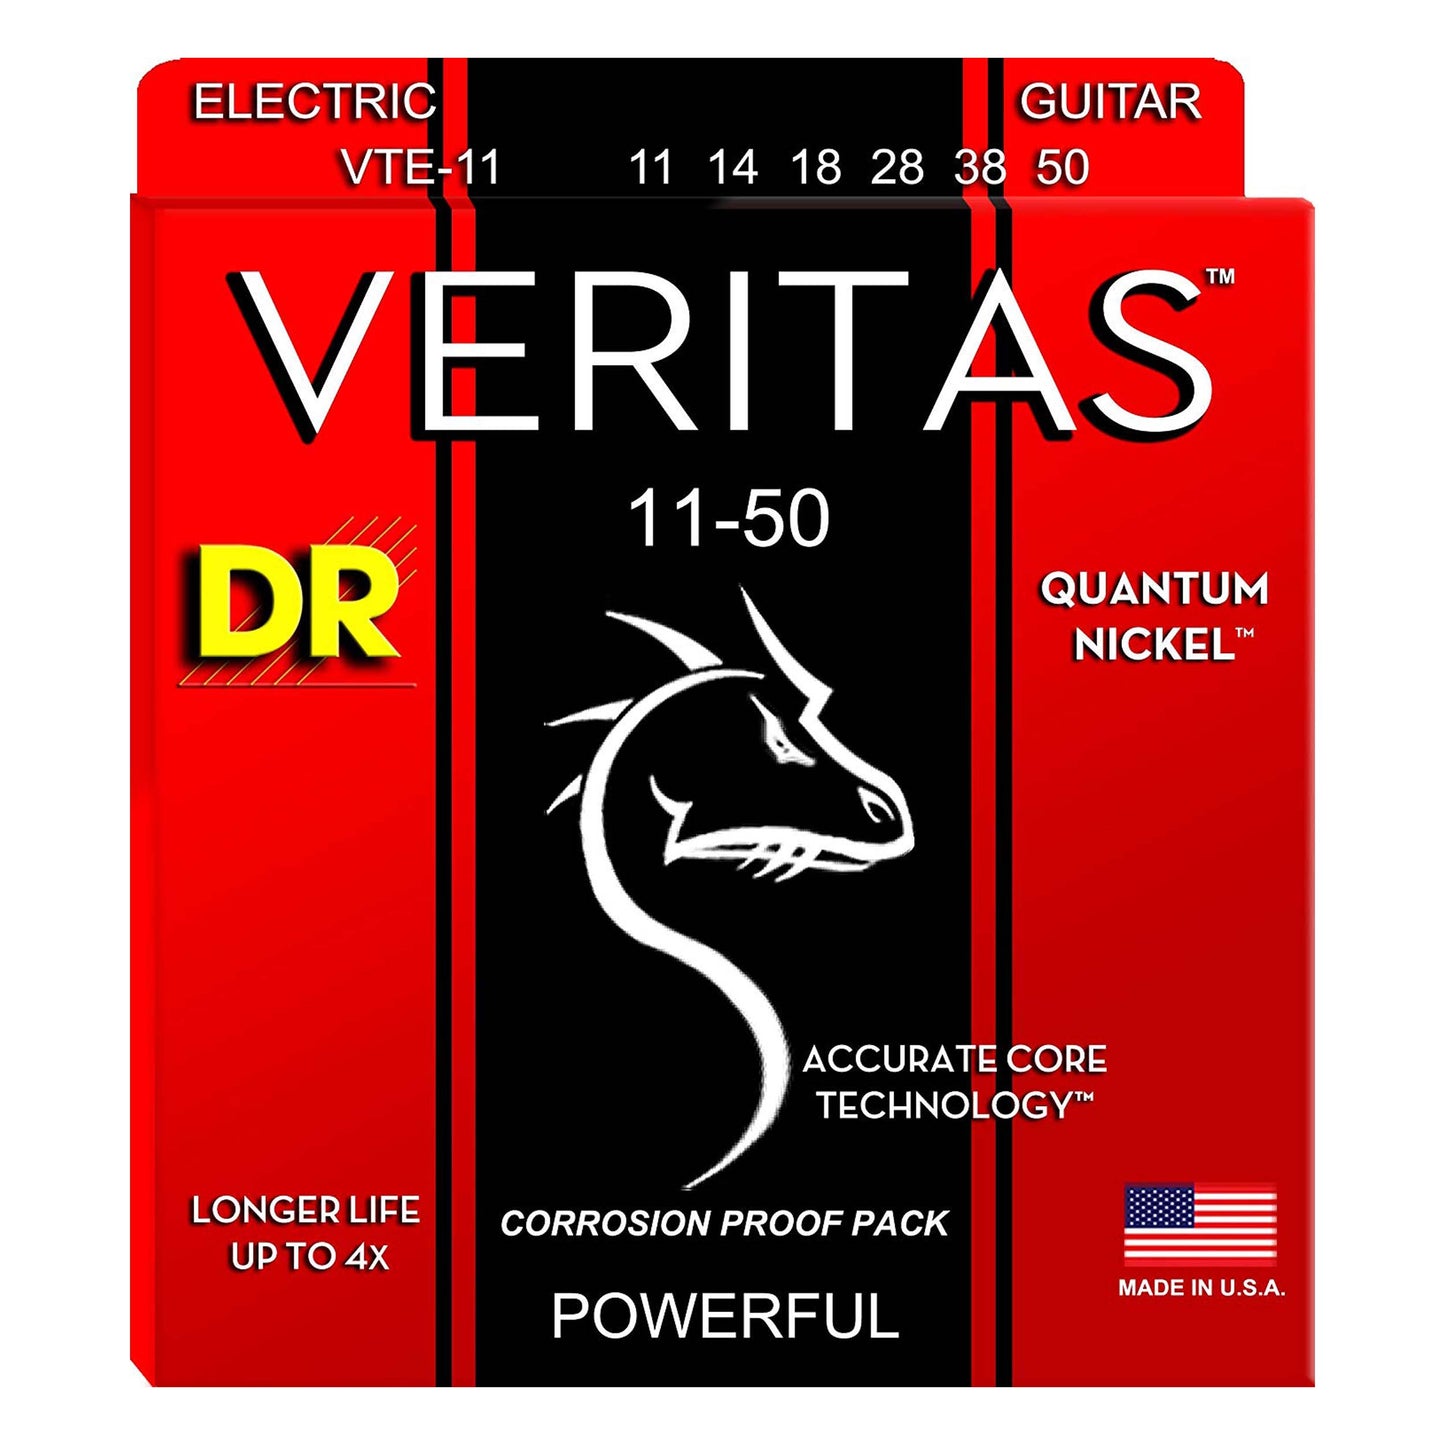 DR Strings VTE-11 VERITAS Electric Guitar String 11-50